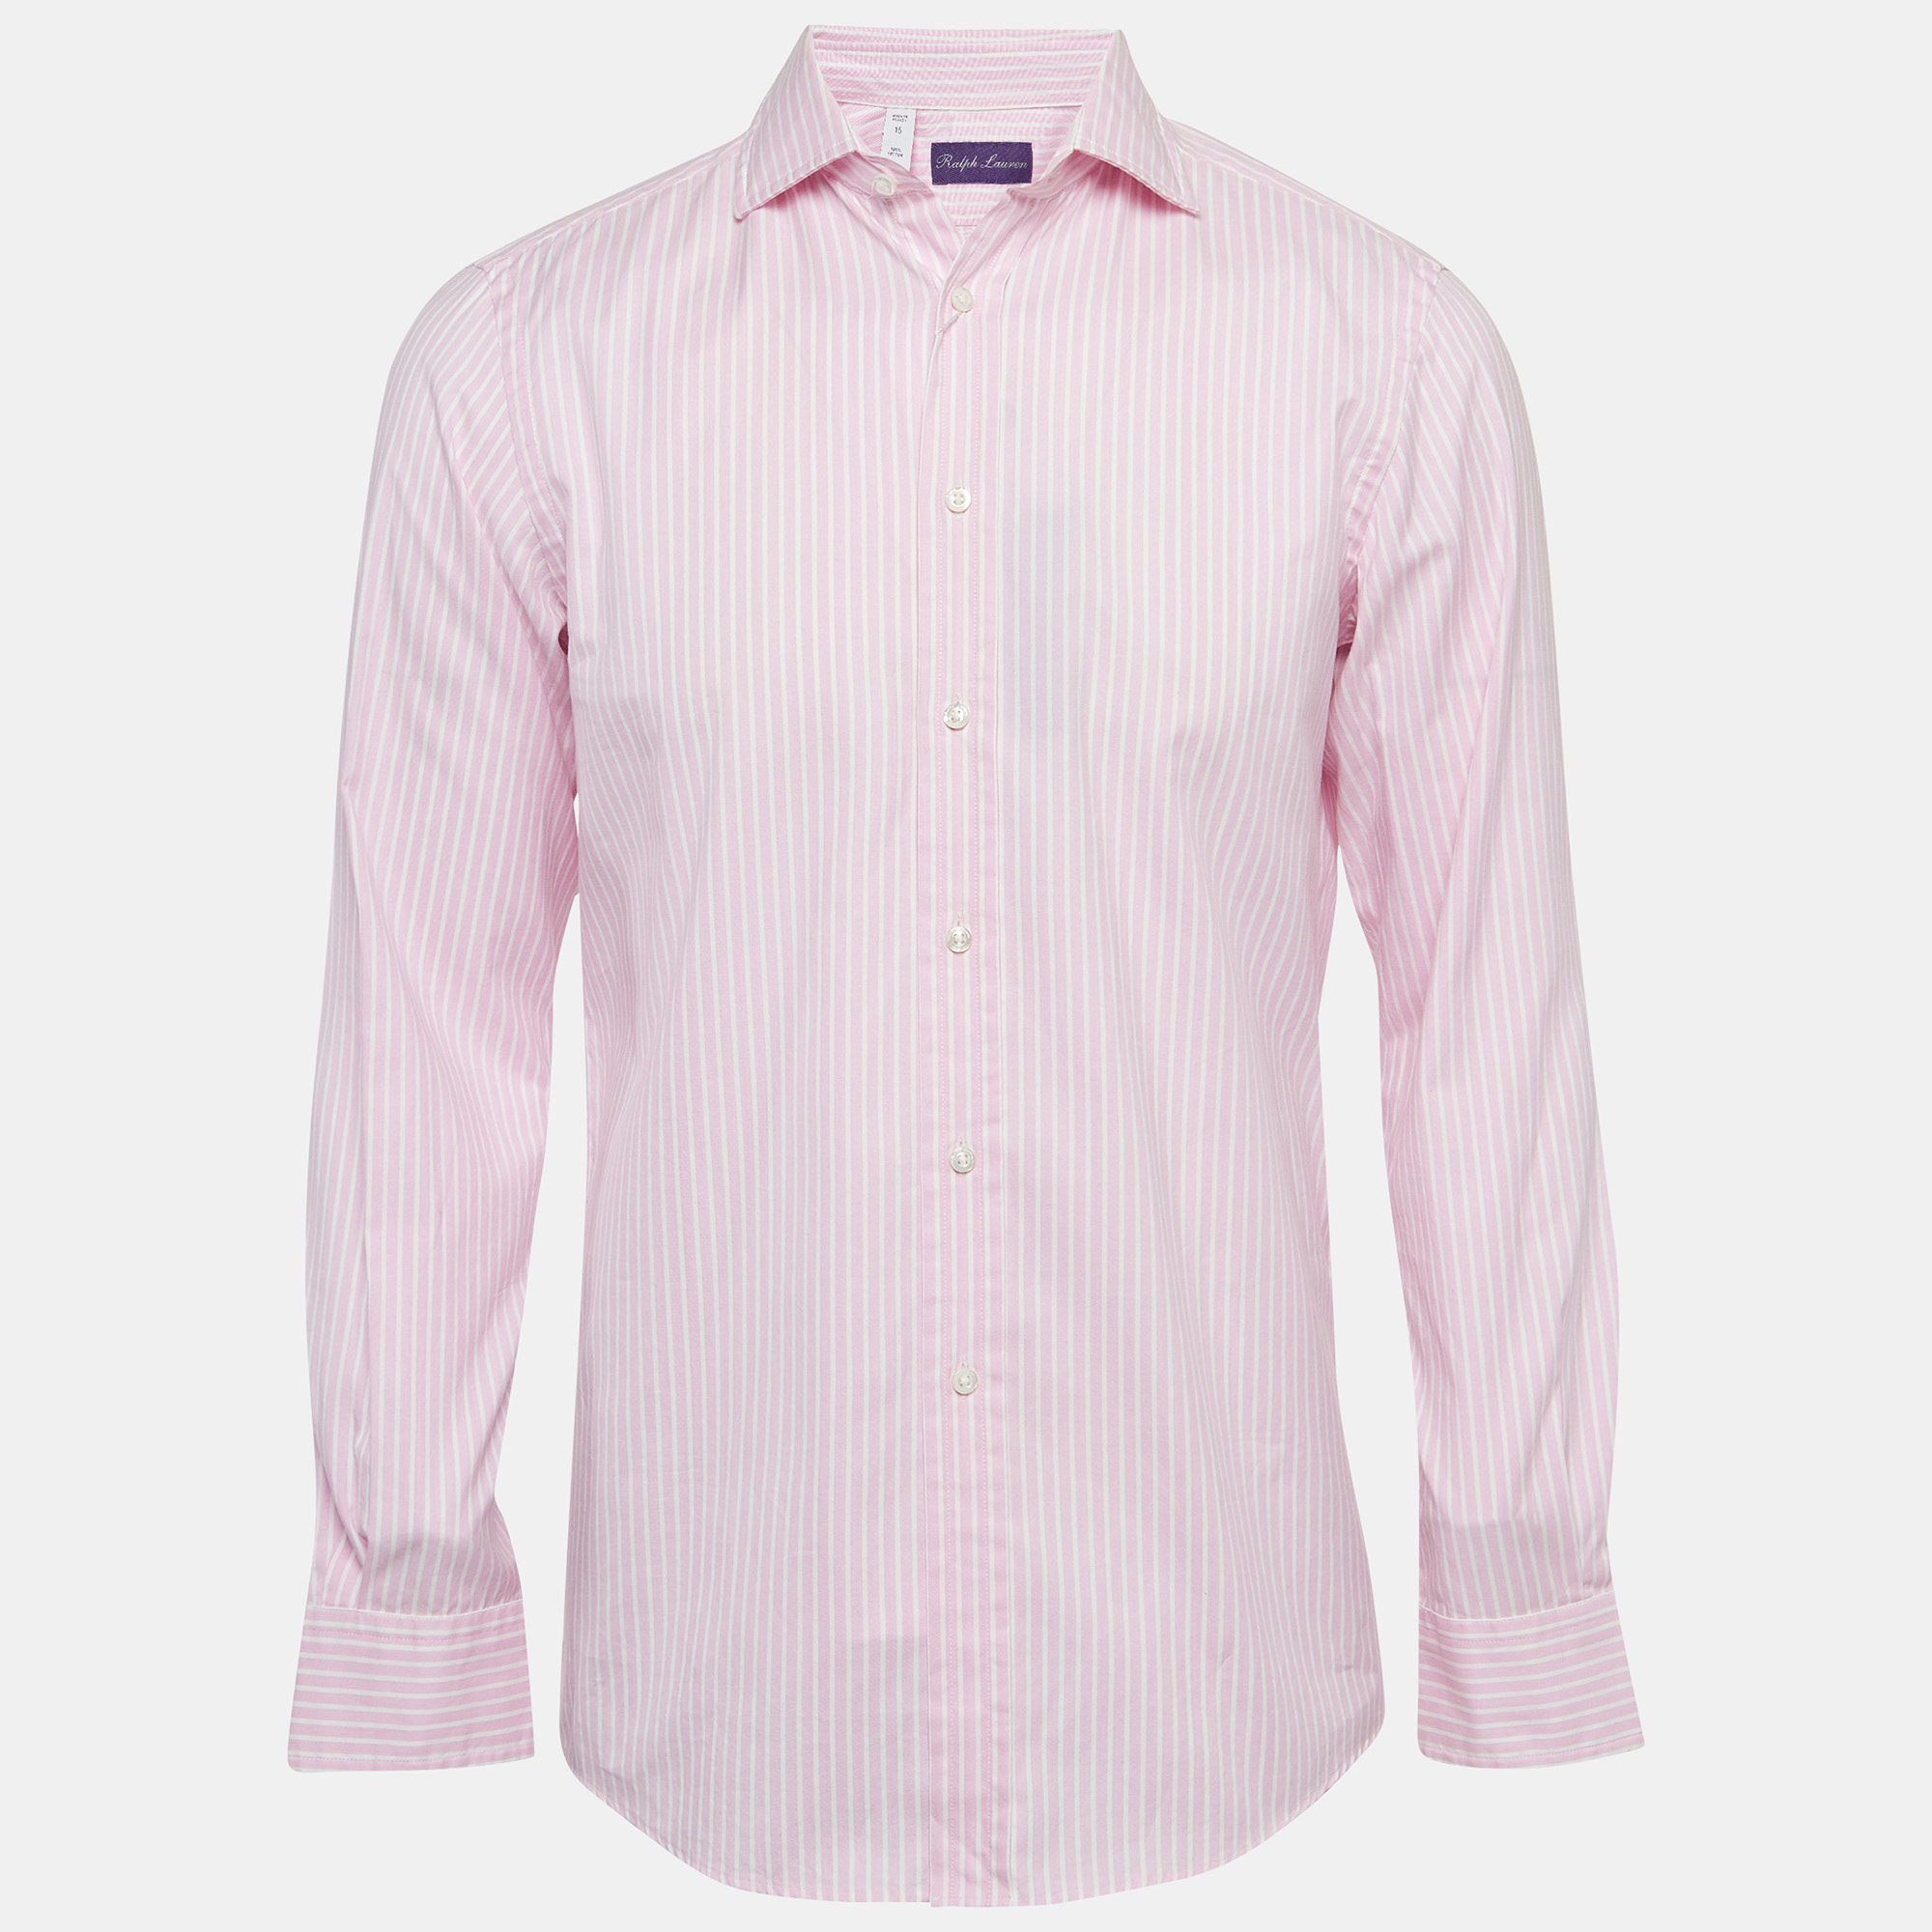 Ralph lauren purple label pink striped cotton shirt s